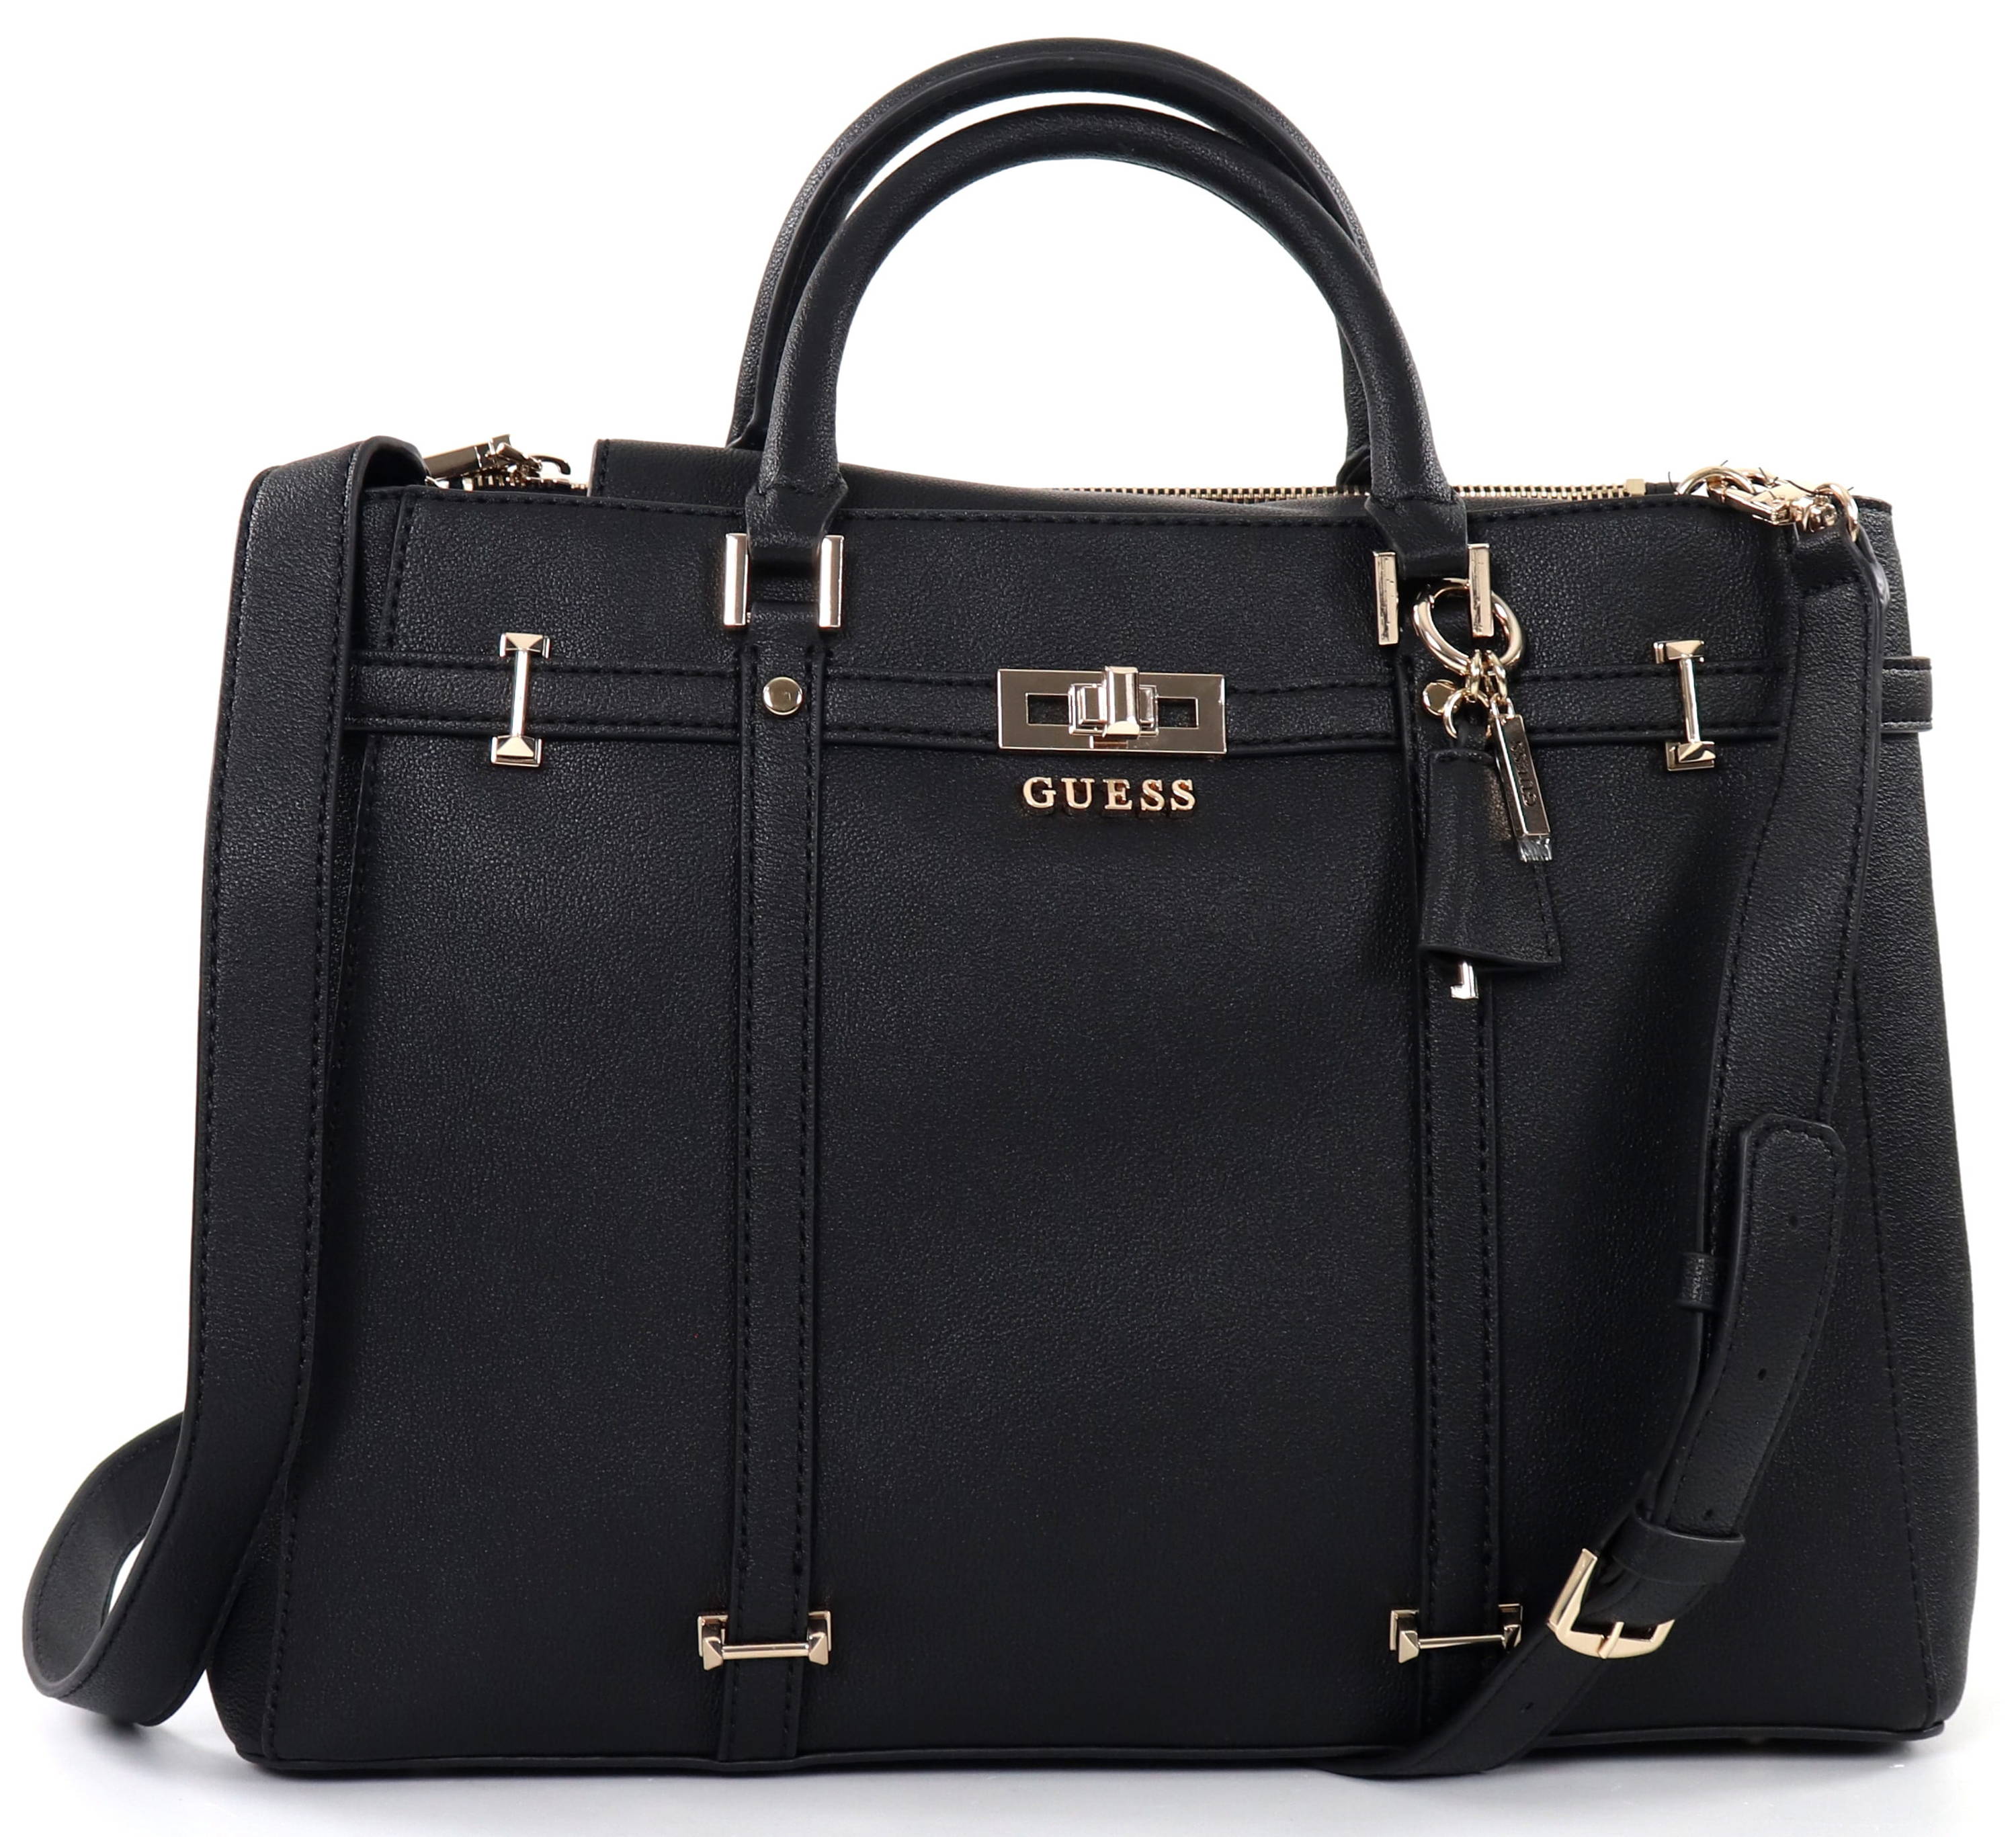 Sleek Guess Handbag in Black